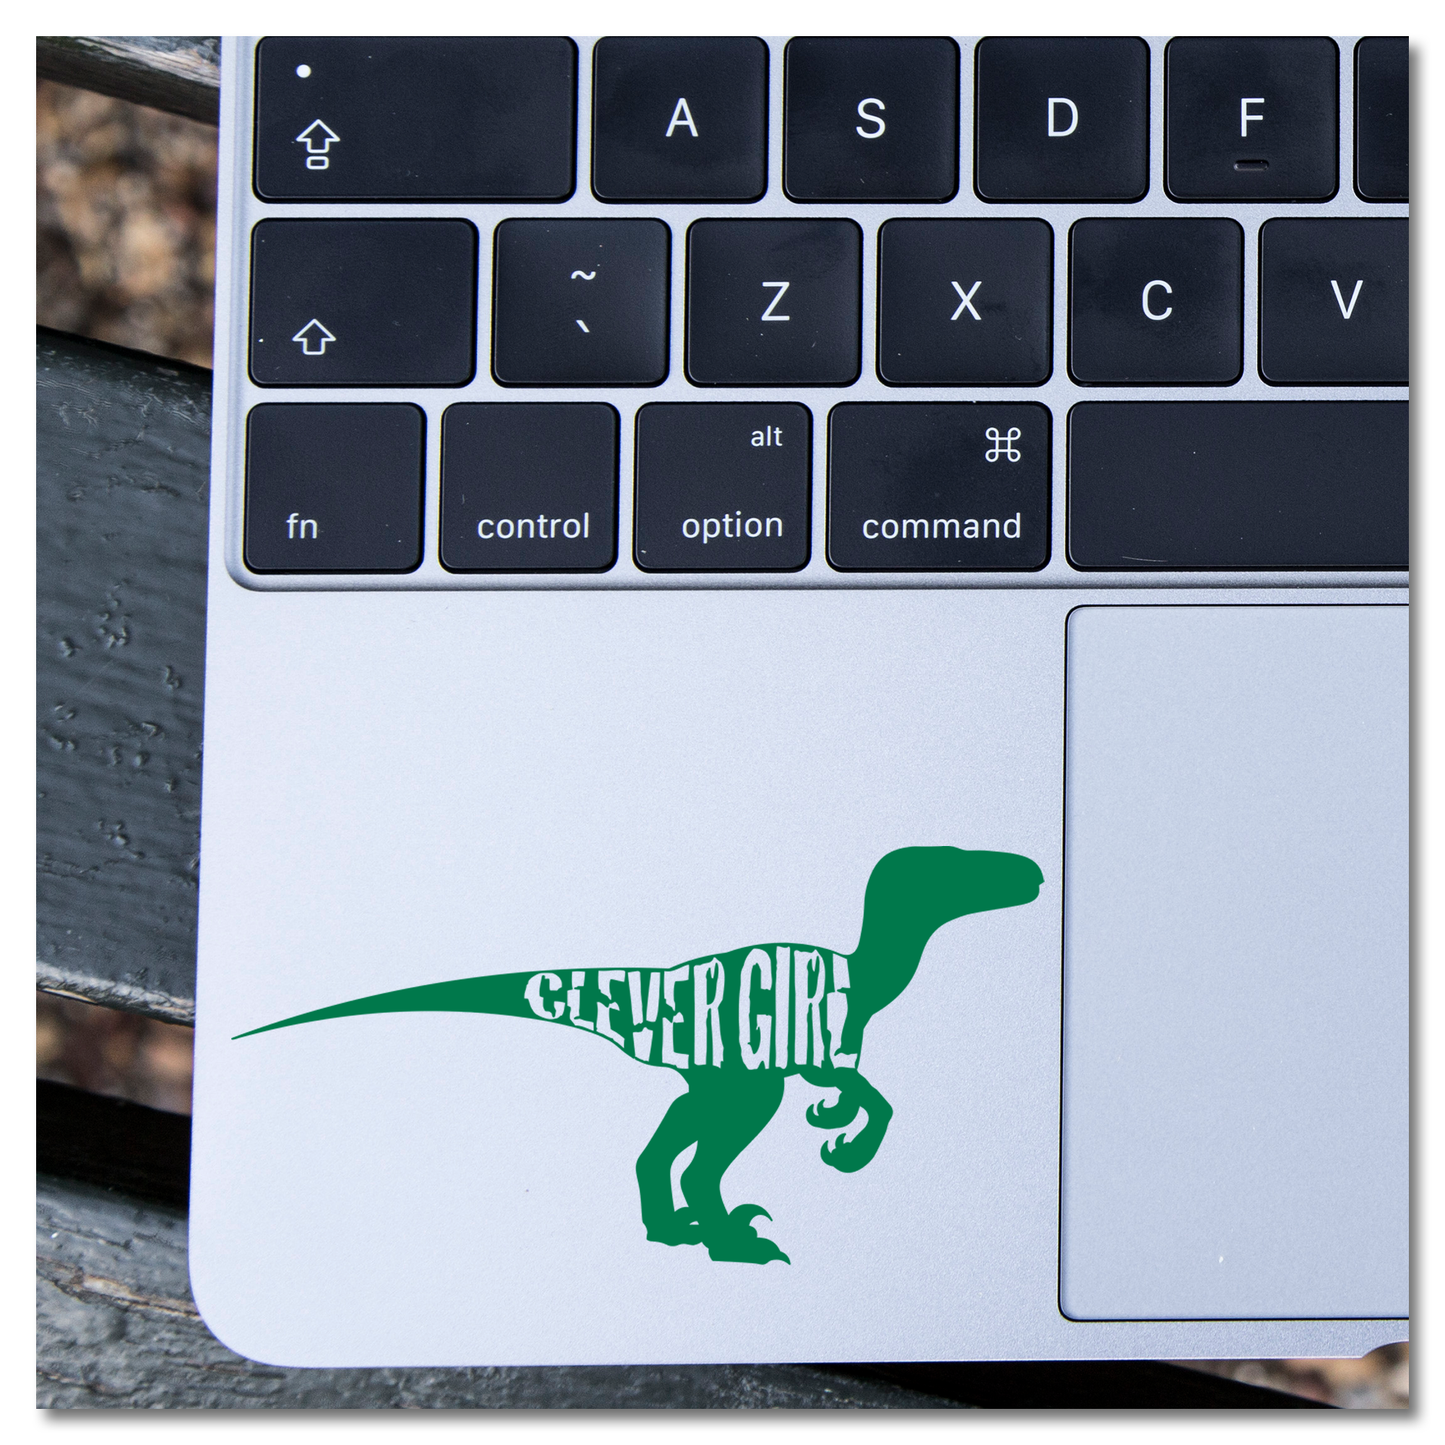 Jurassic Park Clever Girl Velociraptor Vinyl Decal Sticker